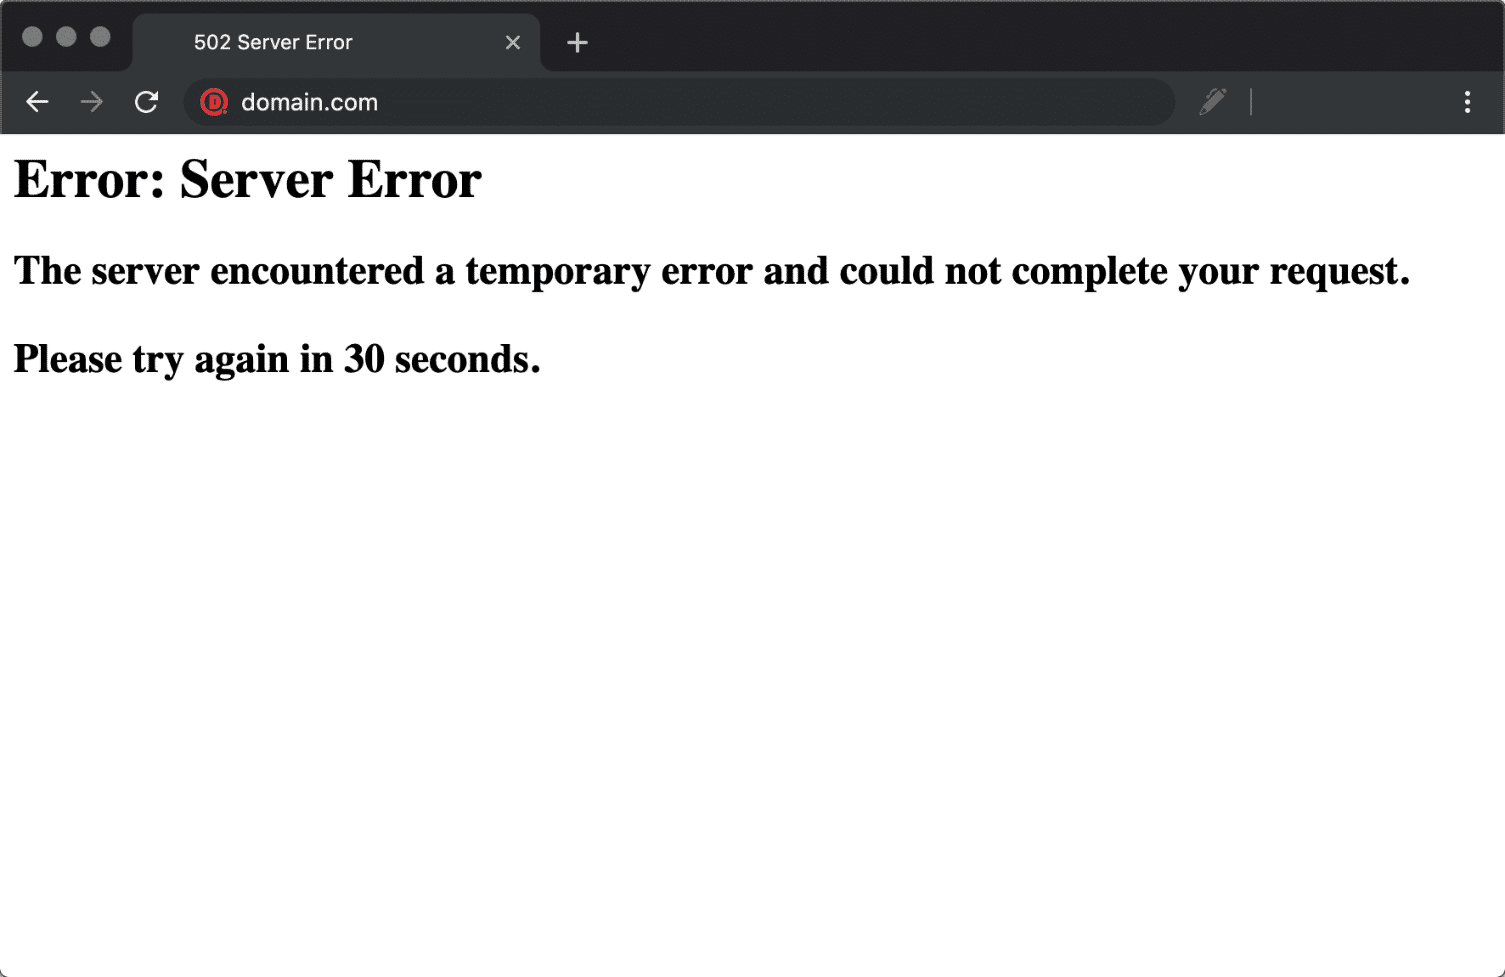 http error 502